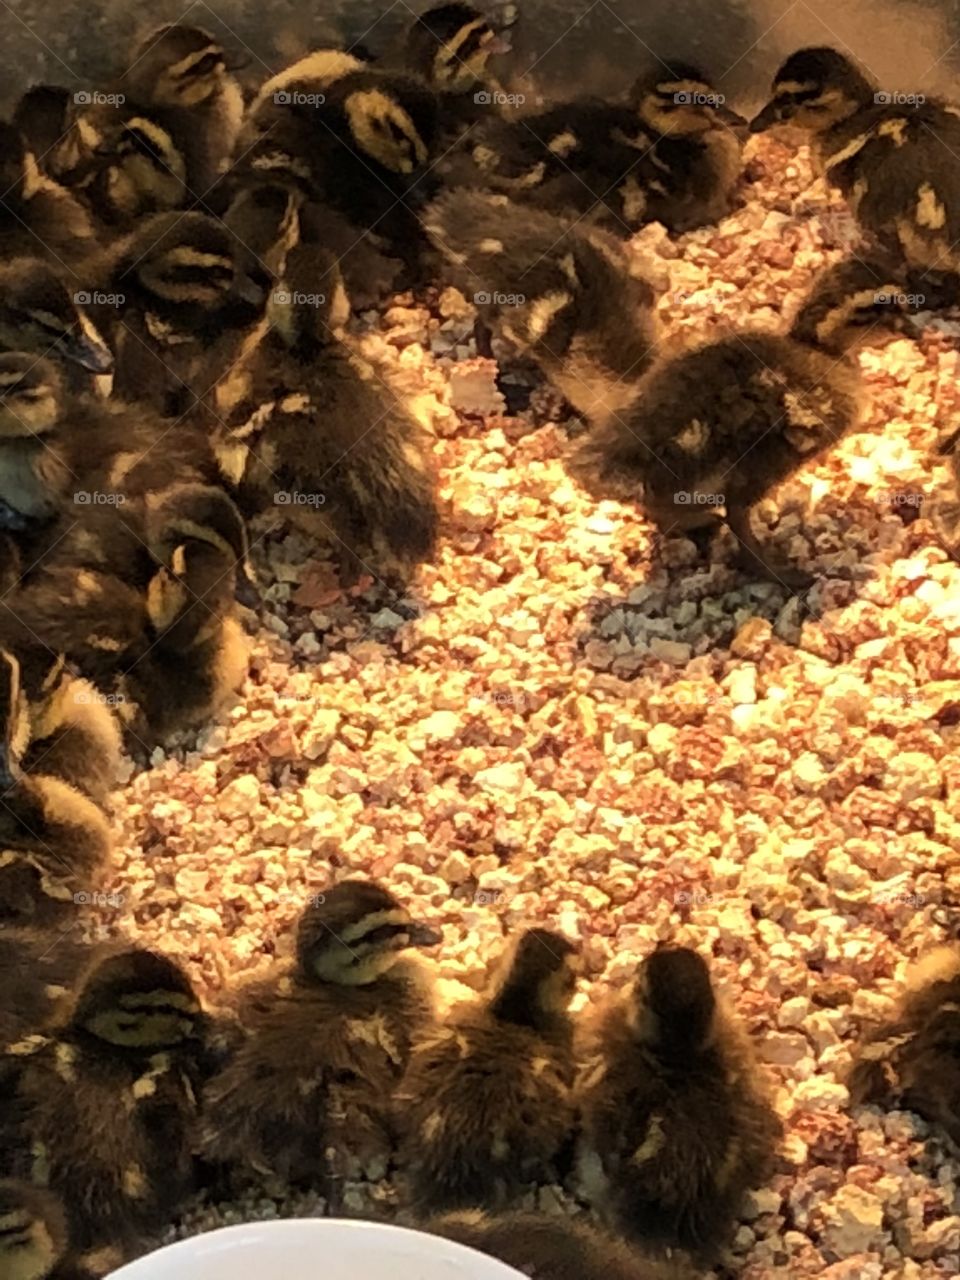 A lot of cute baby goslings